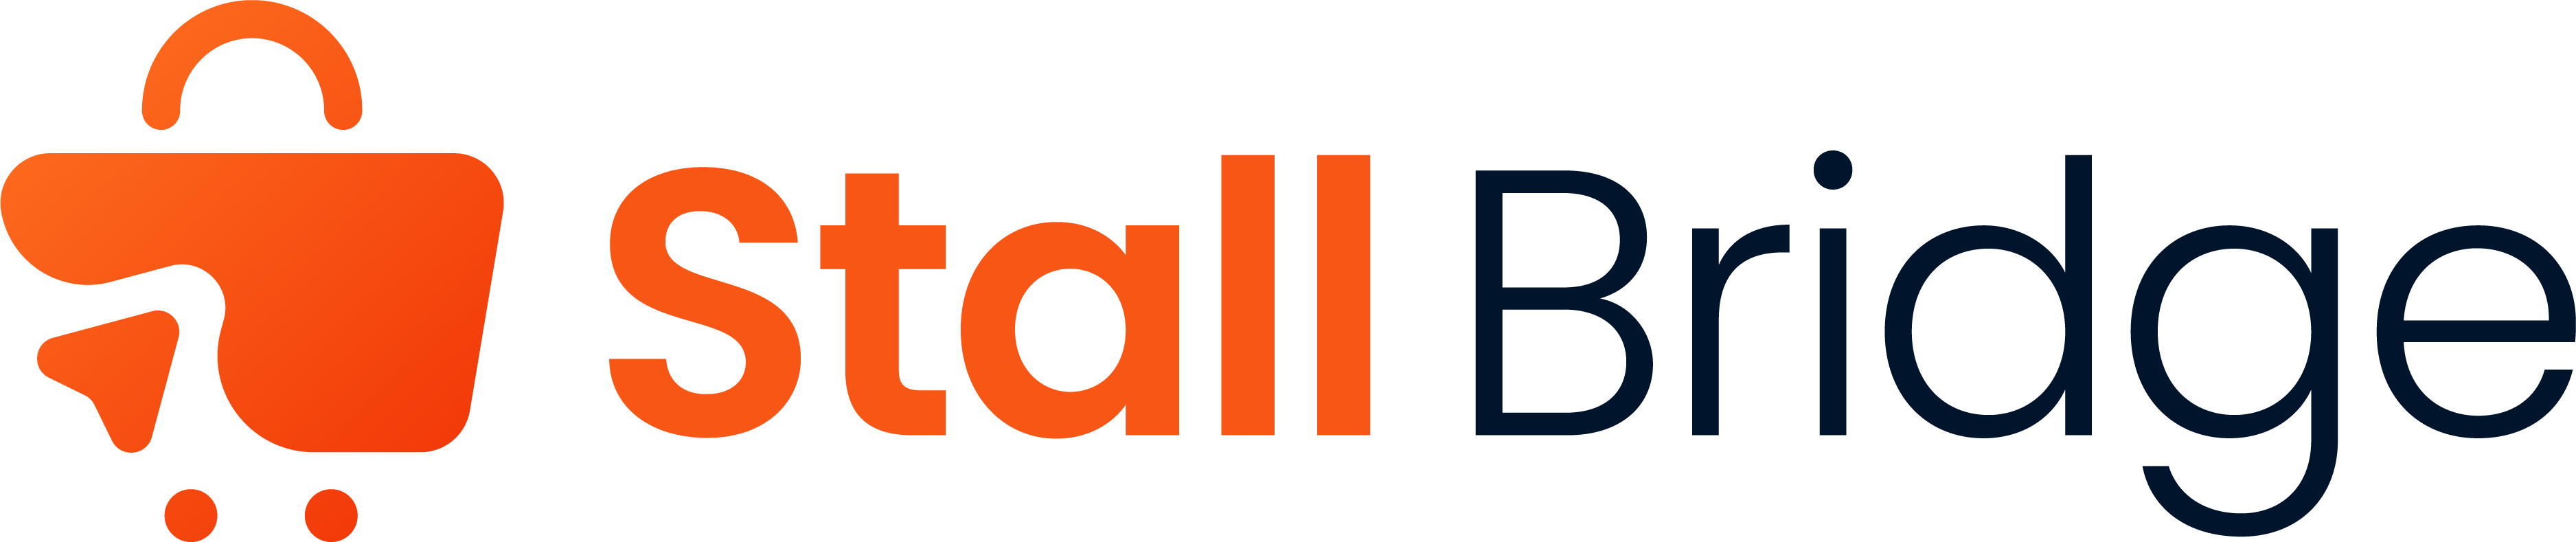 StallBridge Logo New B